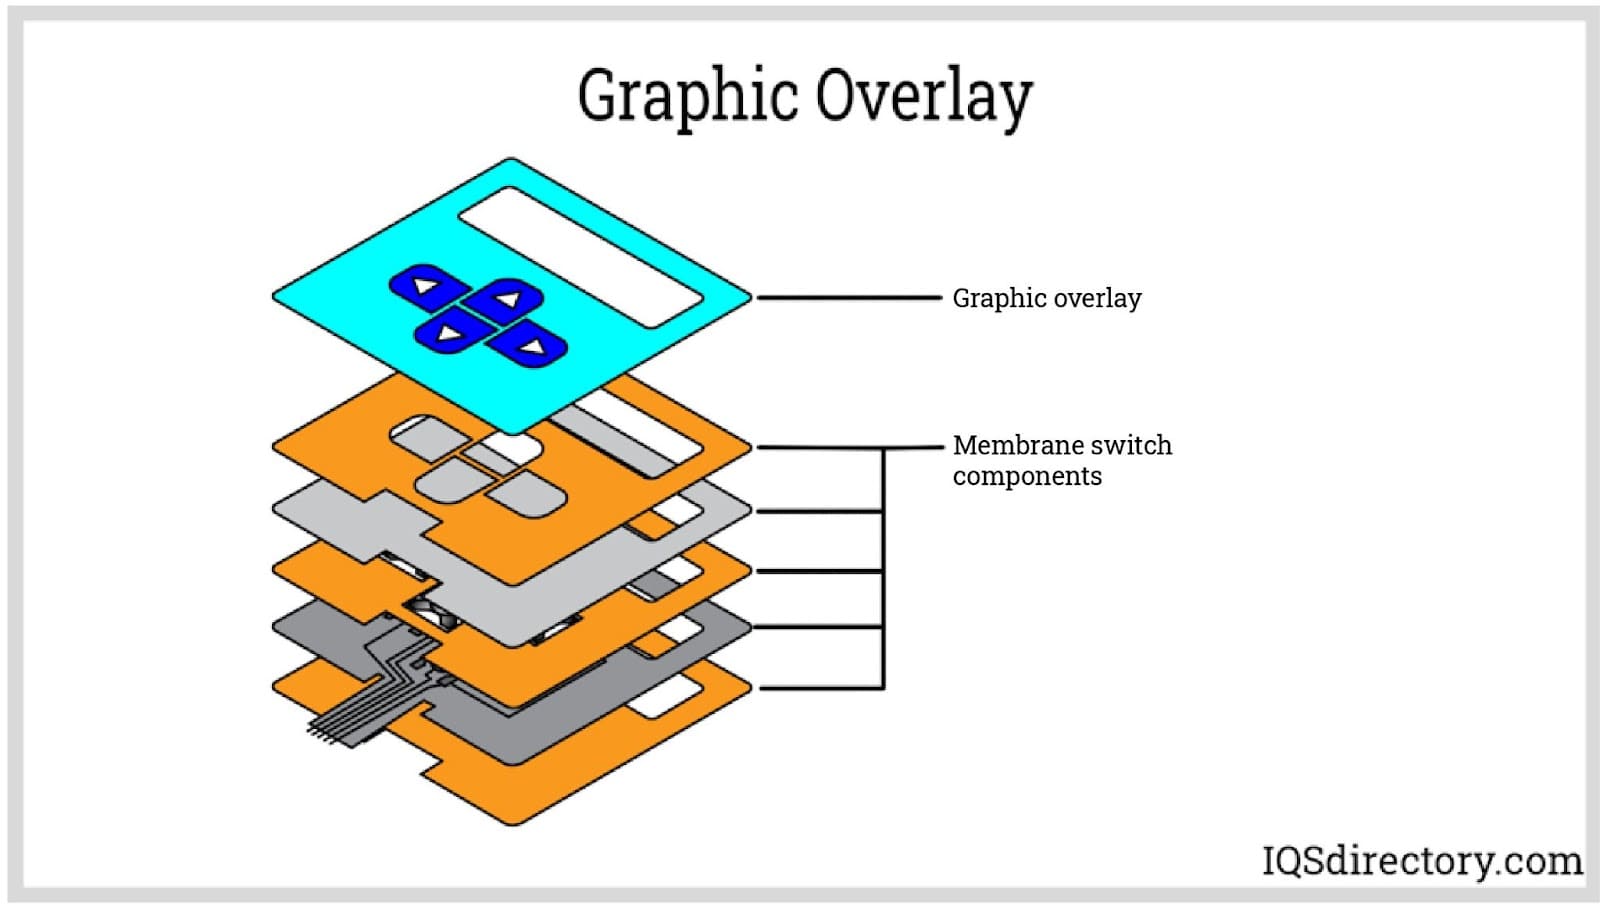 Graphic Overlay